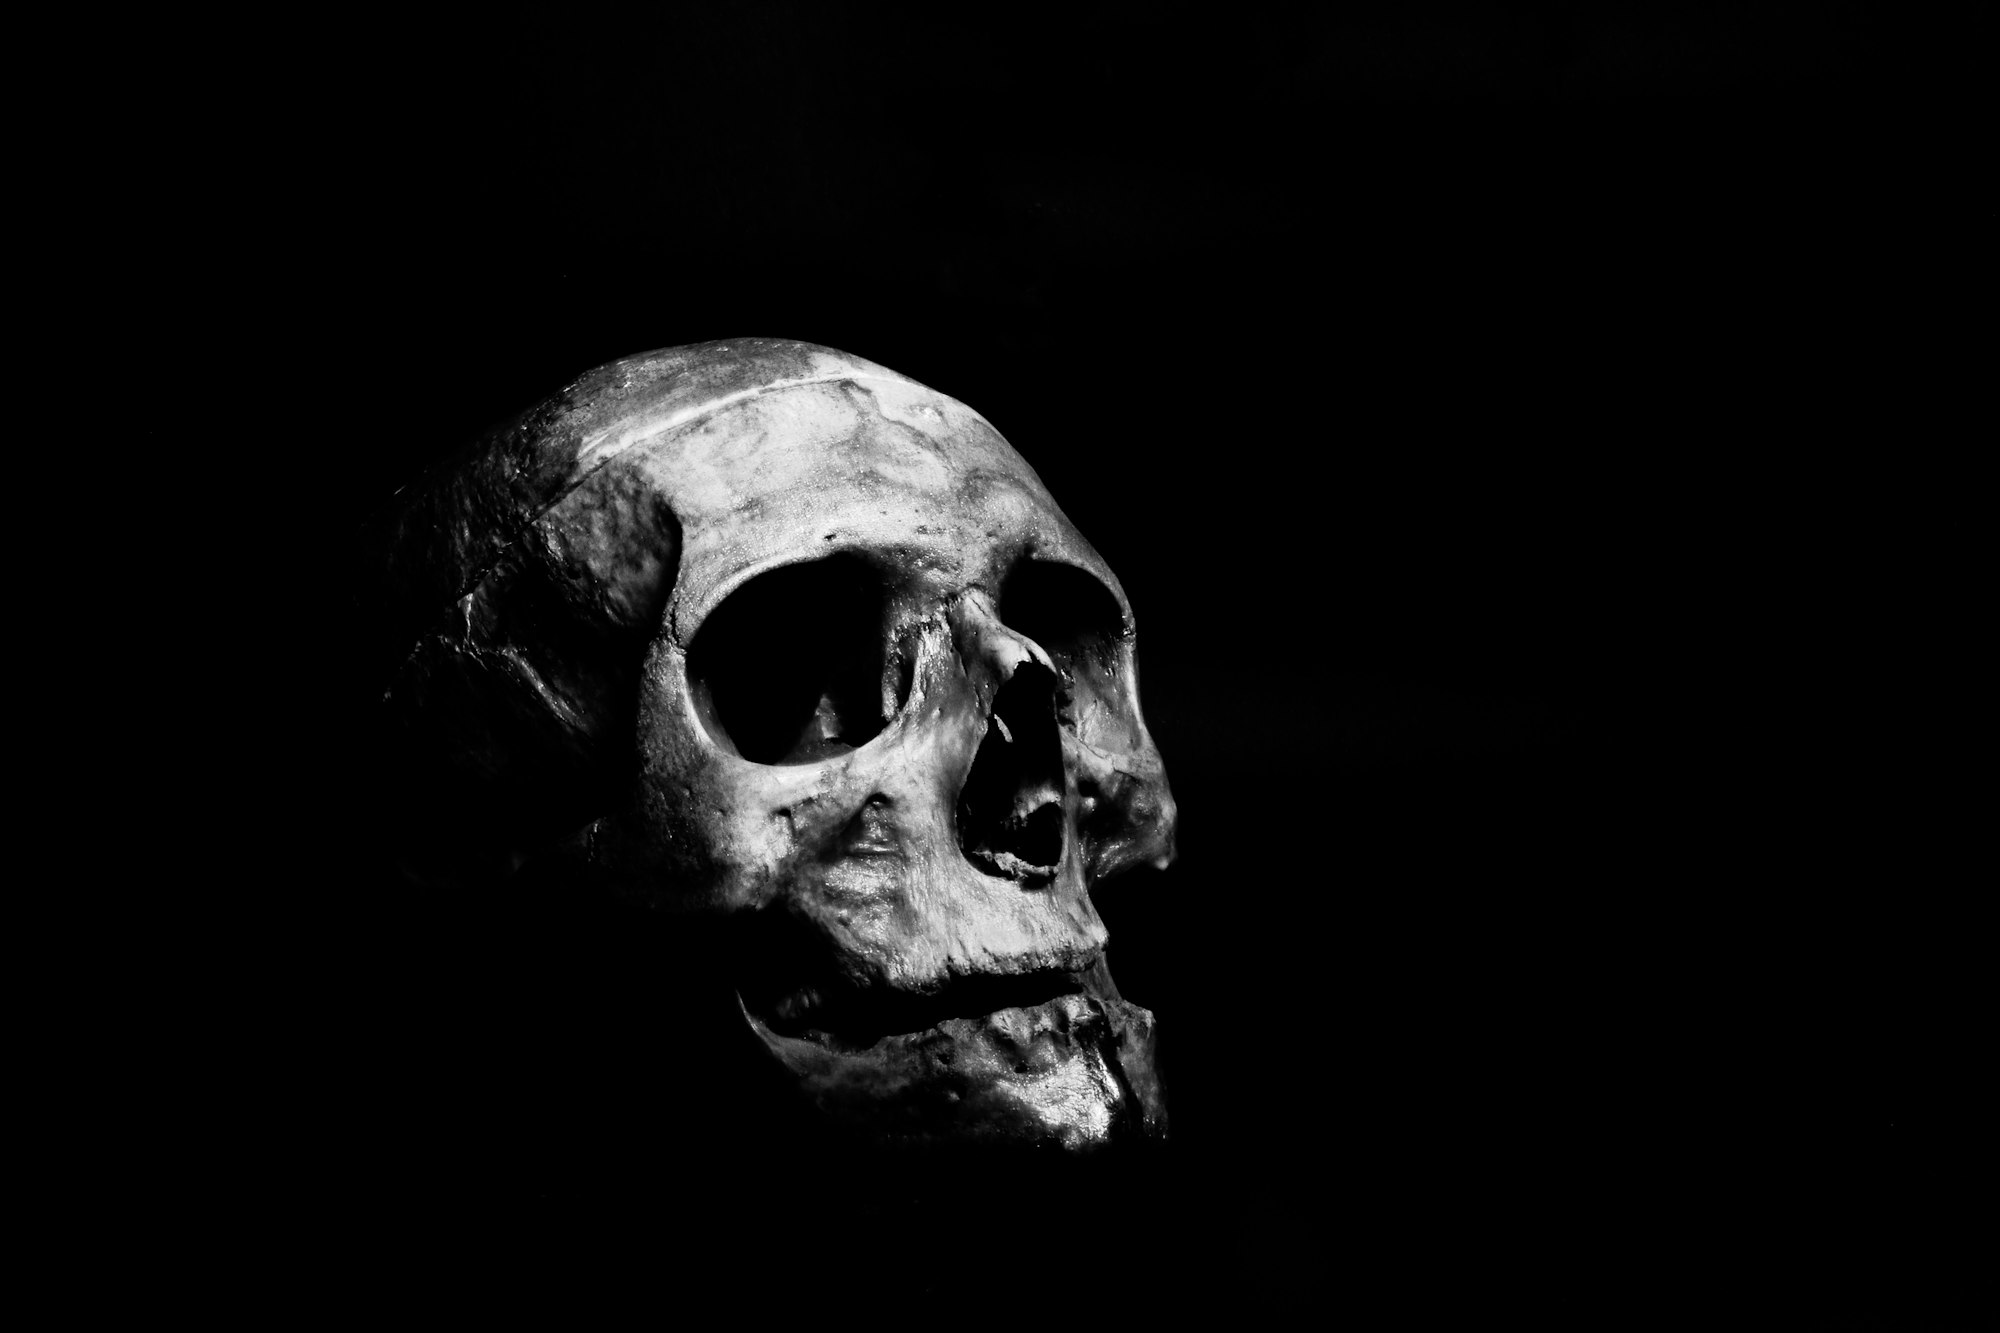 A skull symbolizes death.